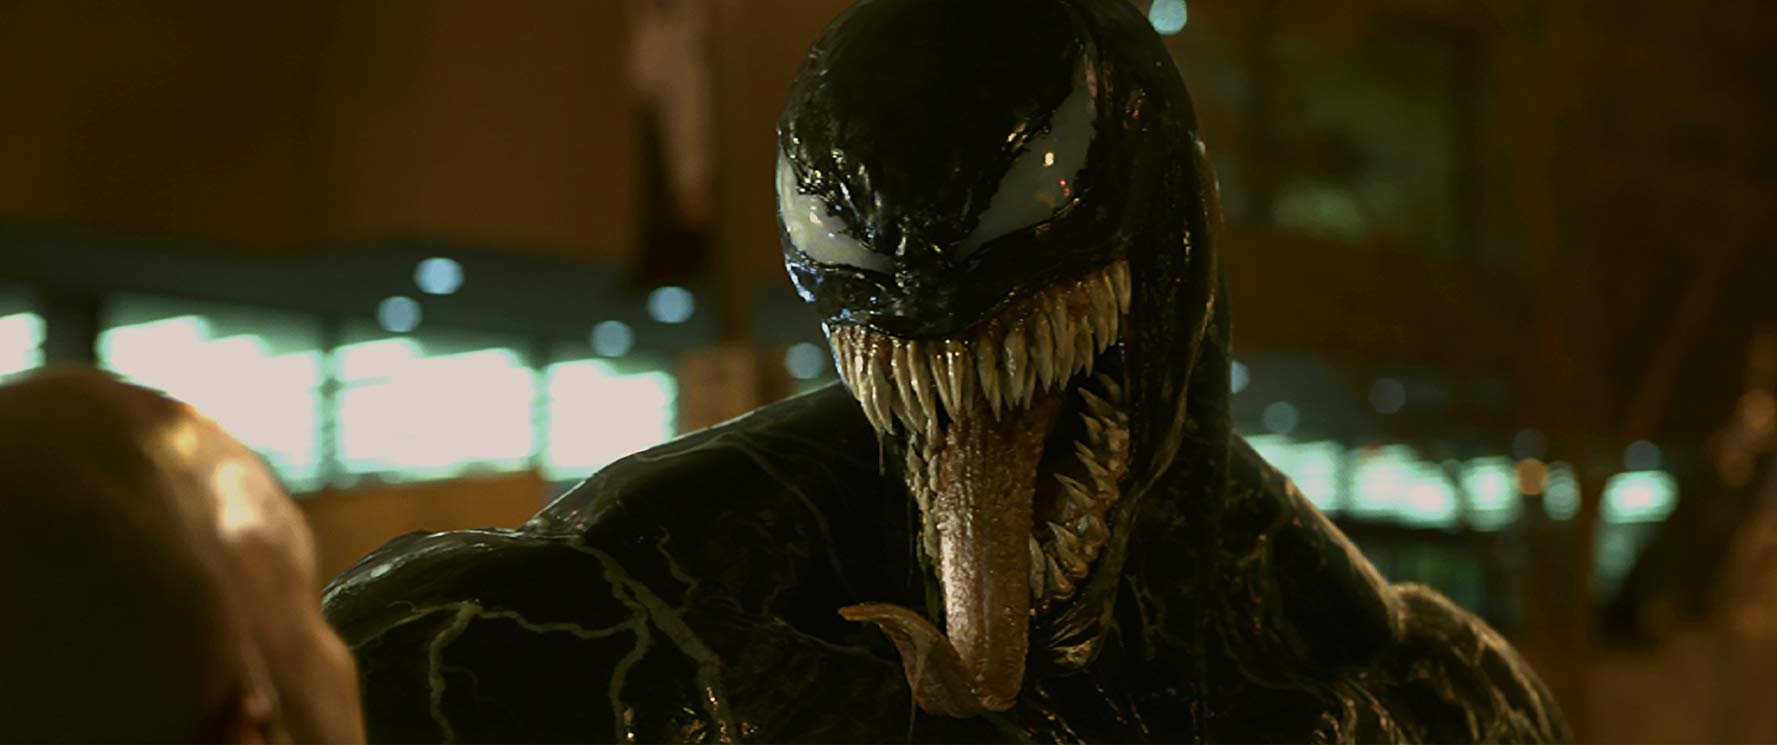 Venom - 2018 (Fonte: IMDb/Reprodução)